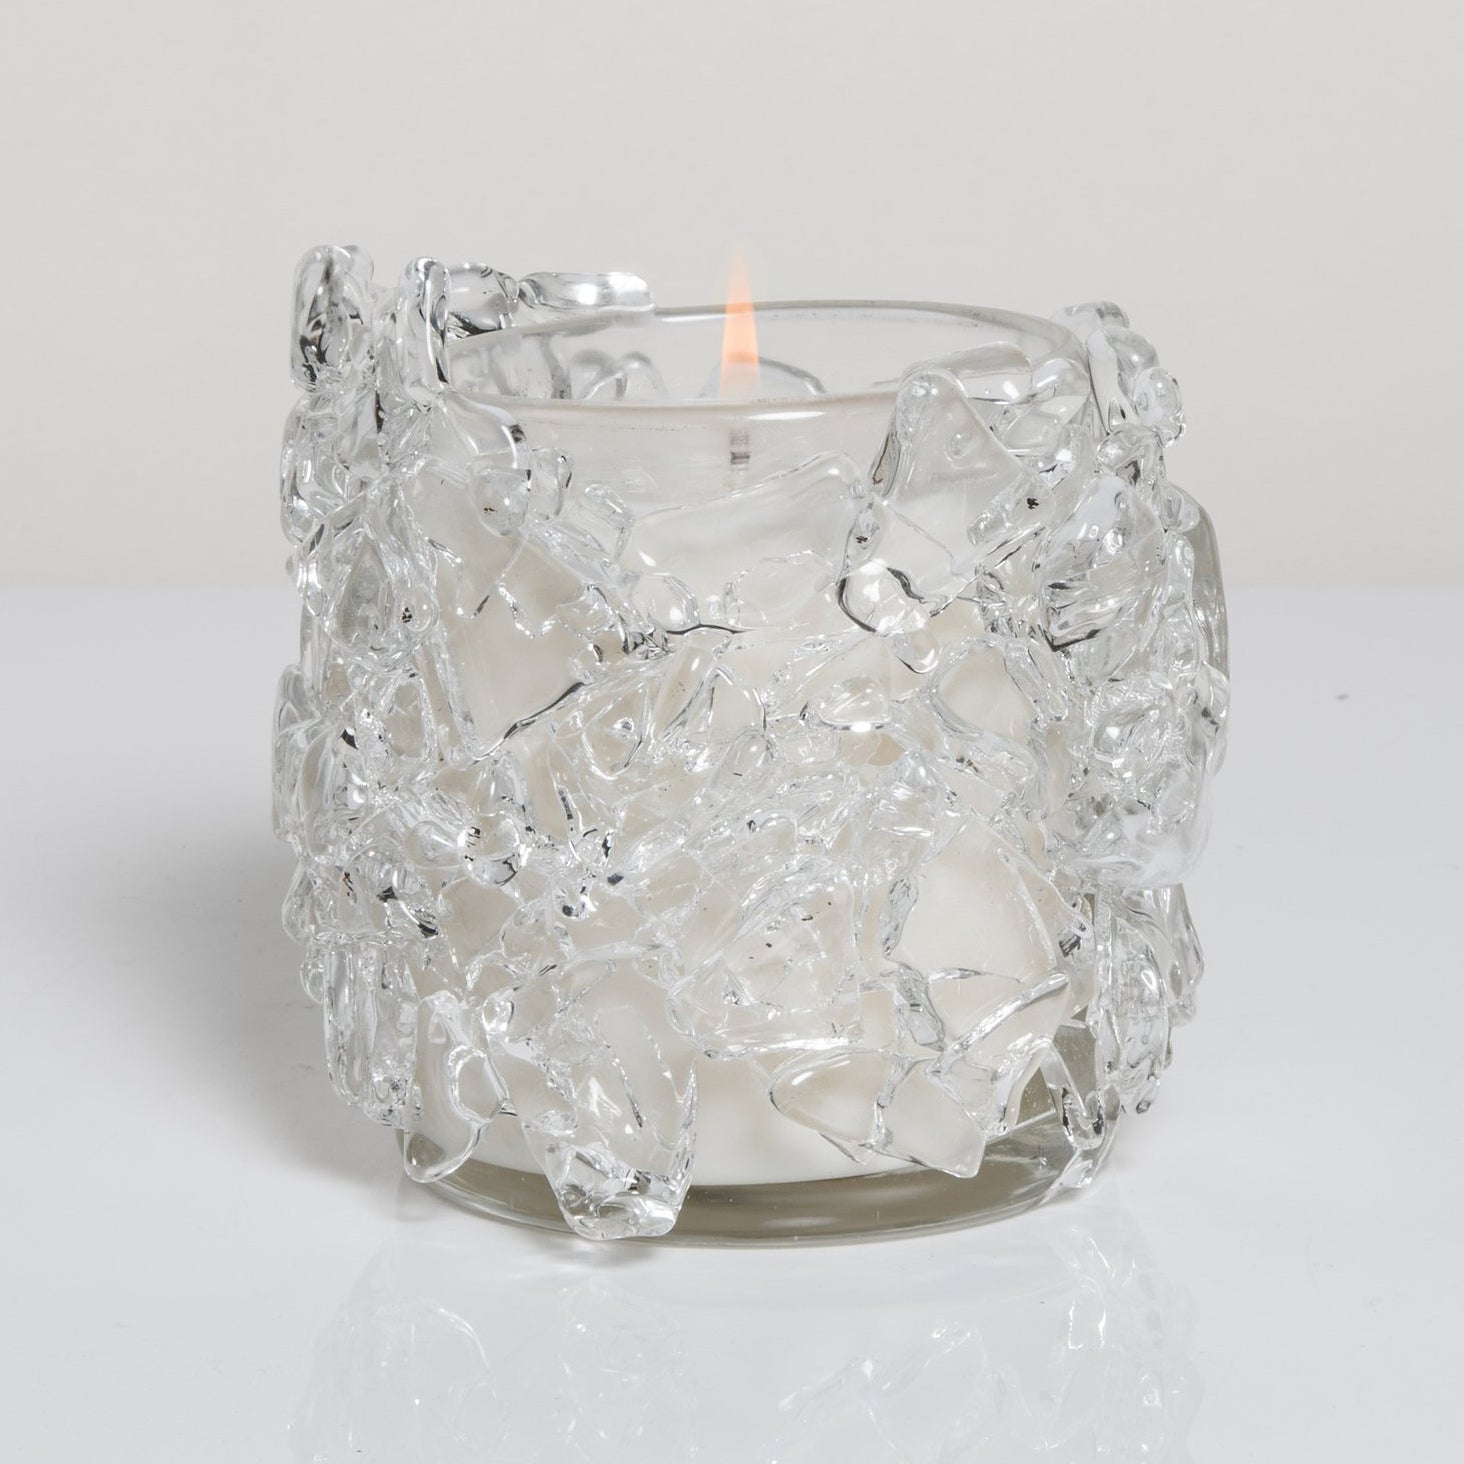 Broken Glass Candle Joya Erba Limited Edition